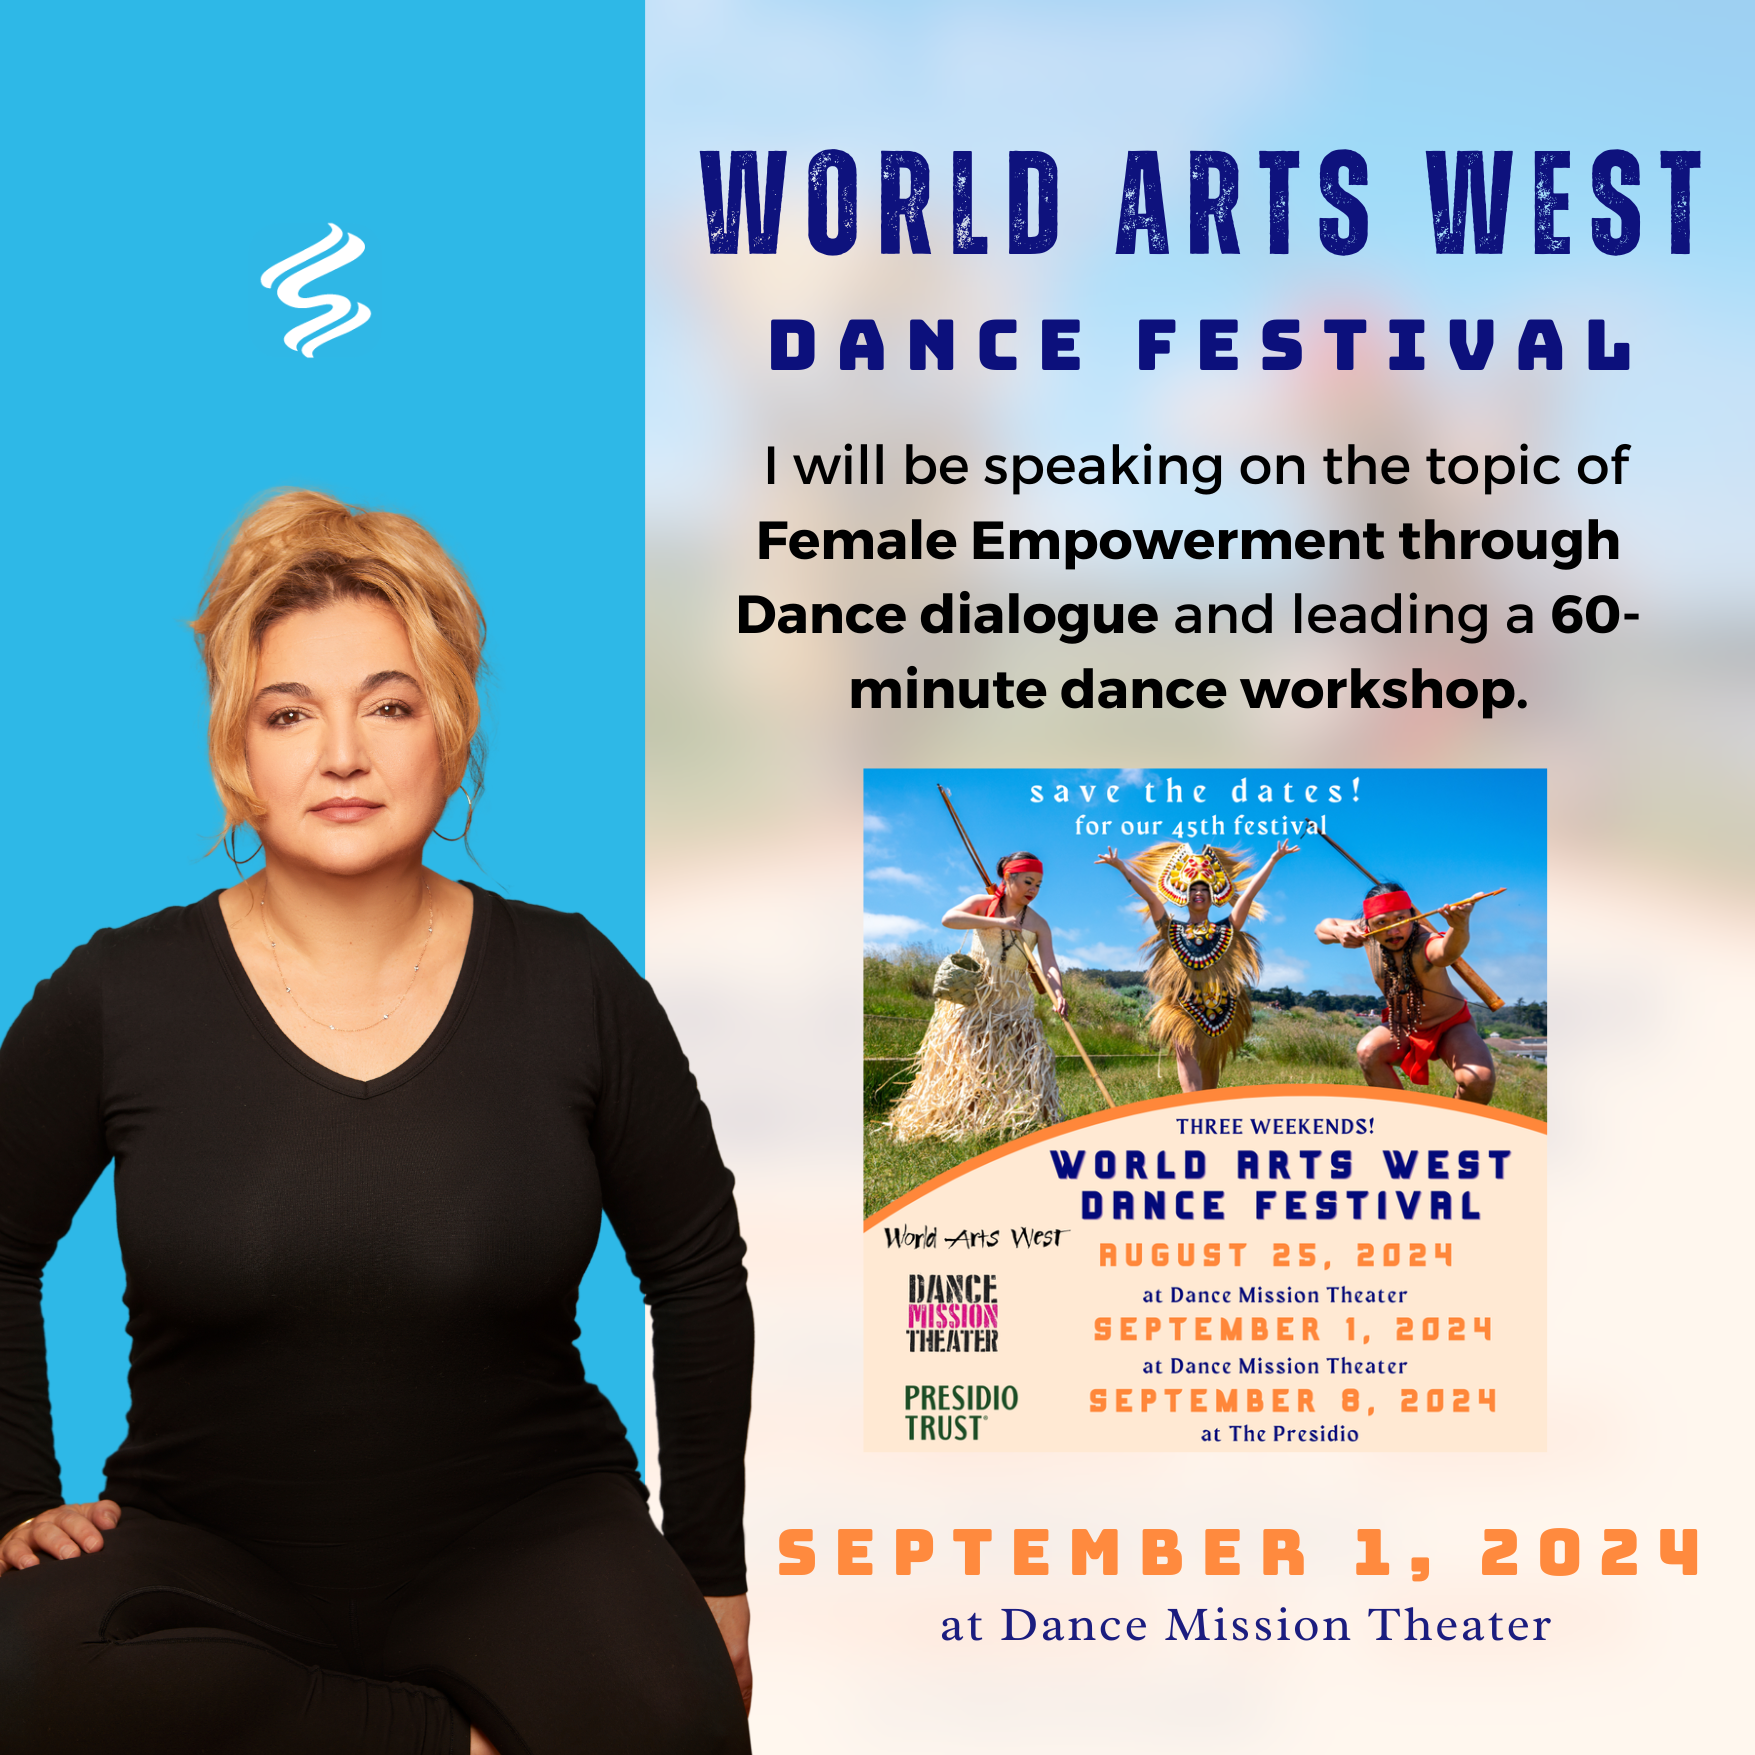 Suhaila Salimpour’s Talk and Dance Workshop on Female Empowerment Through Dance @ World Arts West 2024 Dance Festival